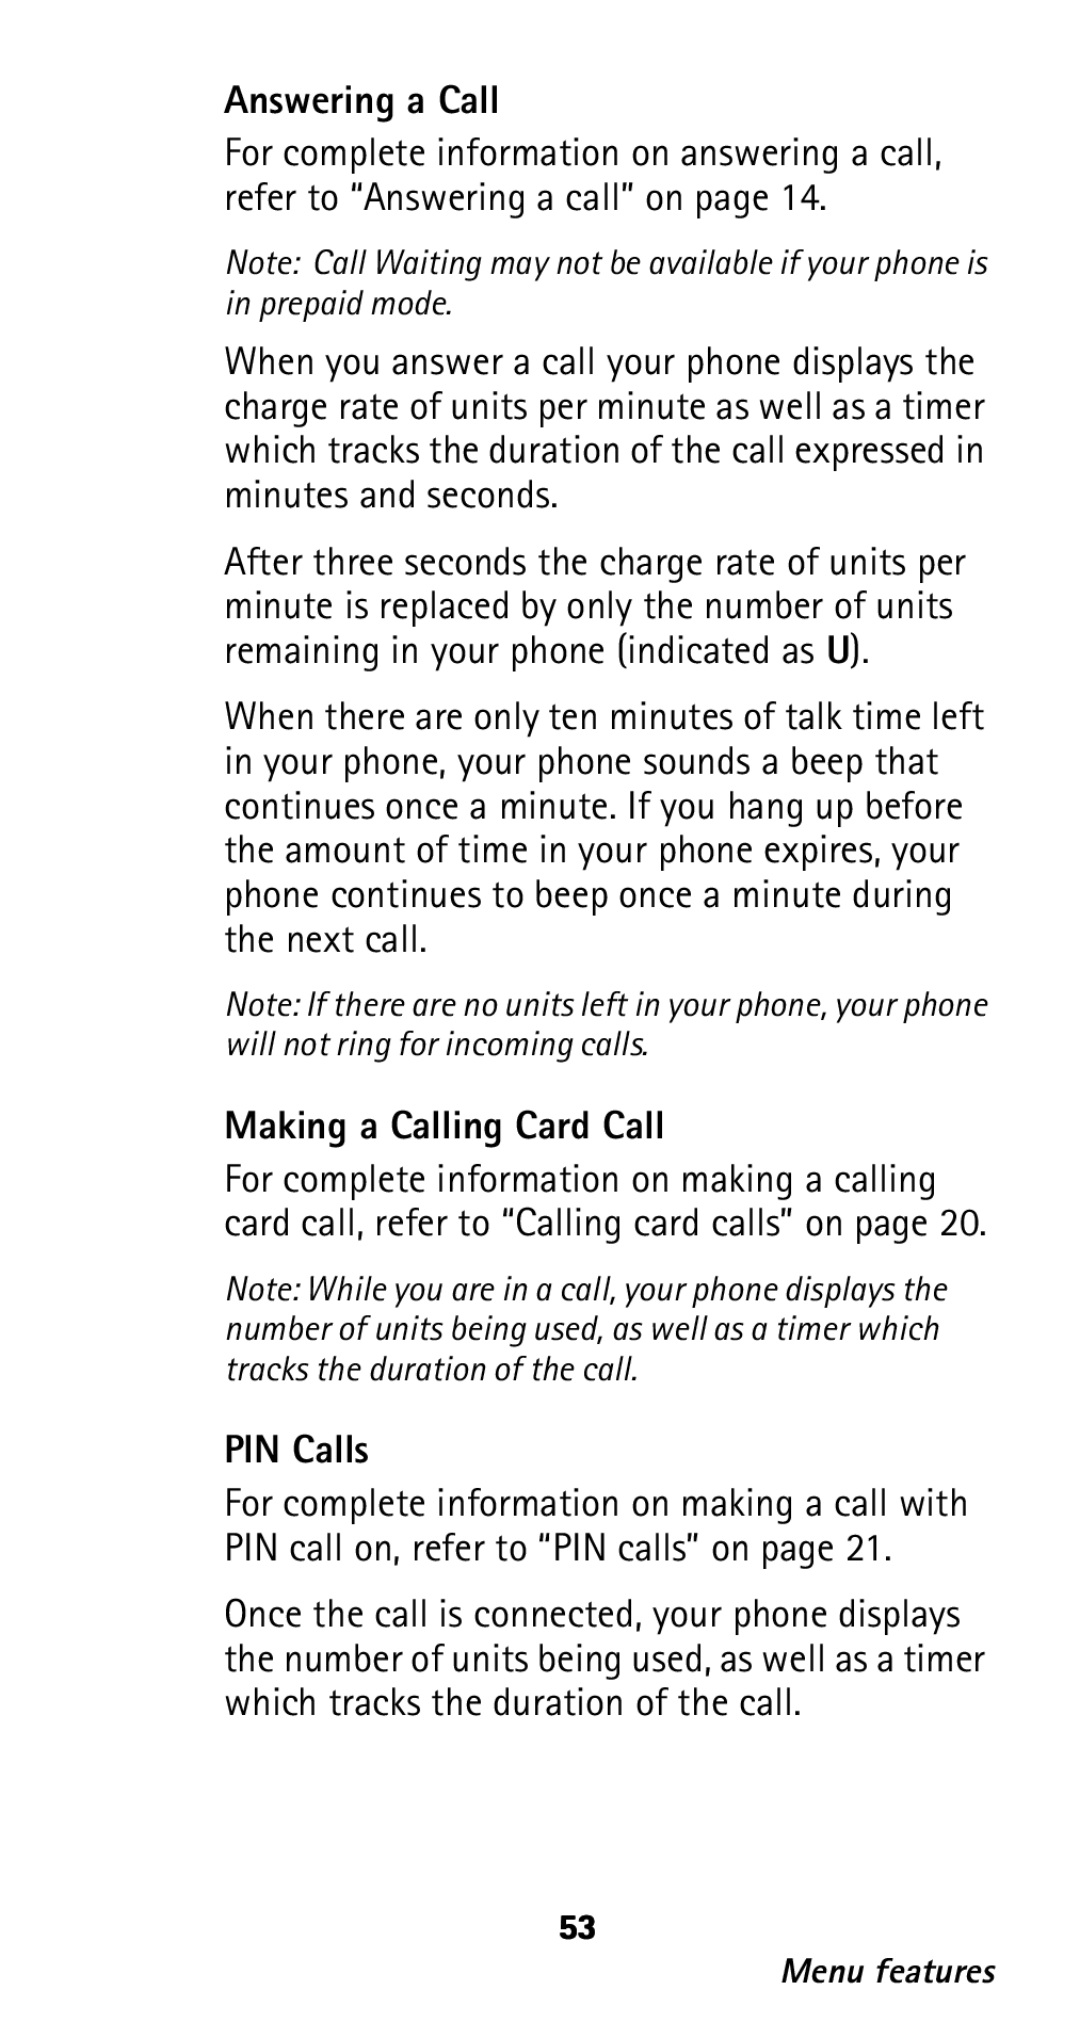 Nokia 282 owner manual Answering a Call, Making a Calling Card Call, PIN Calls 